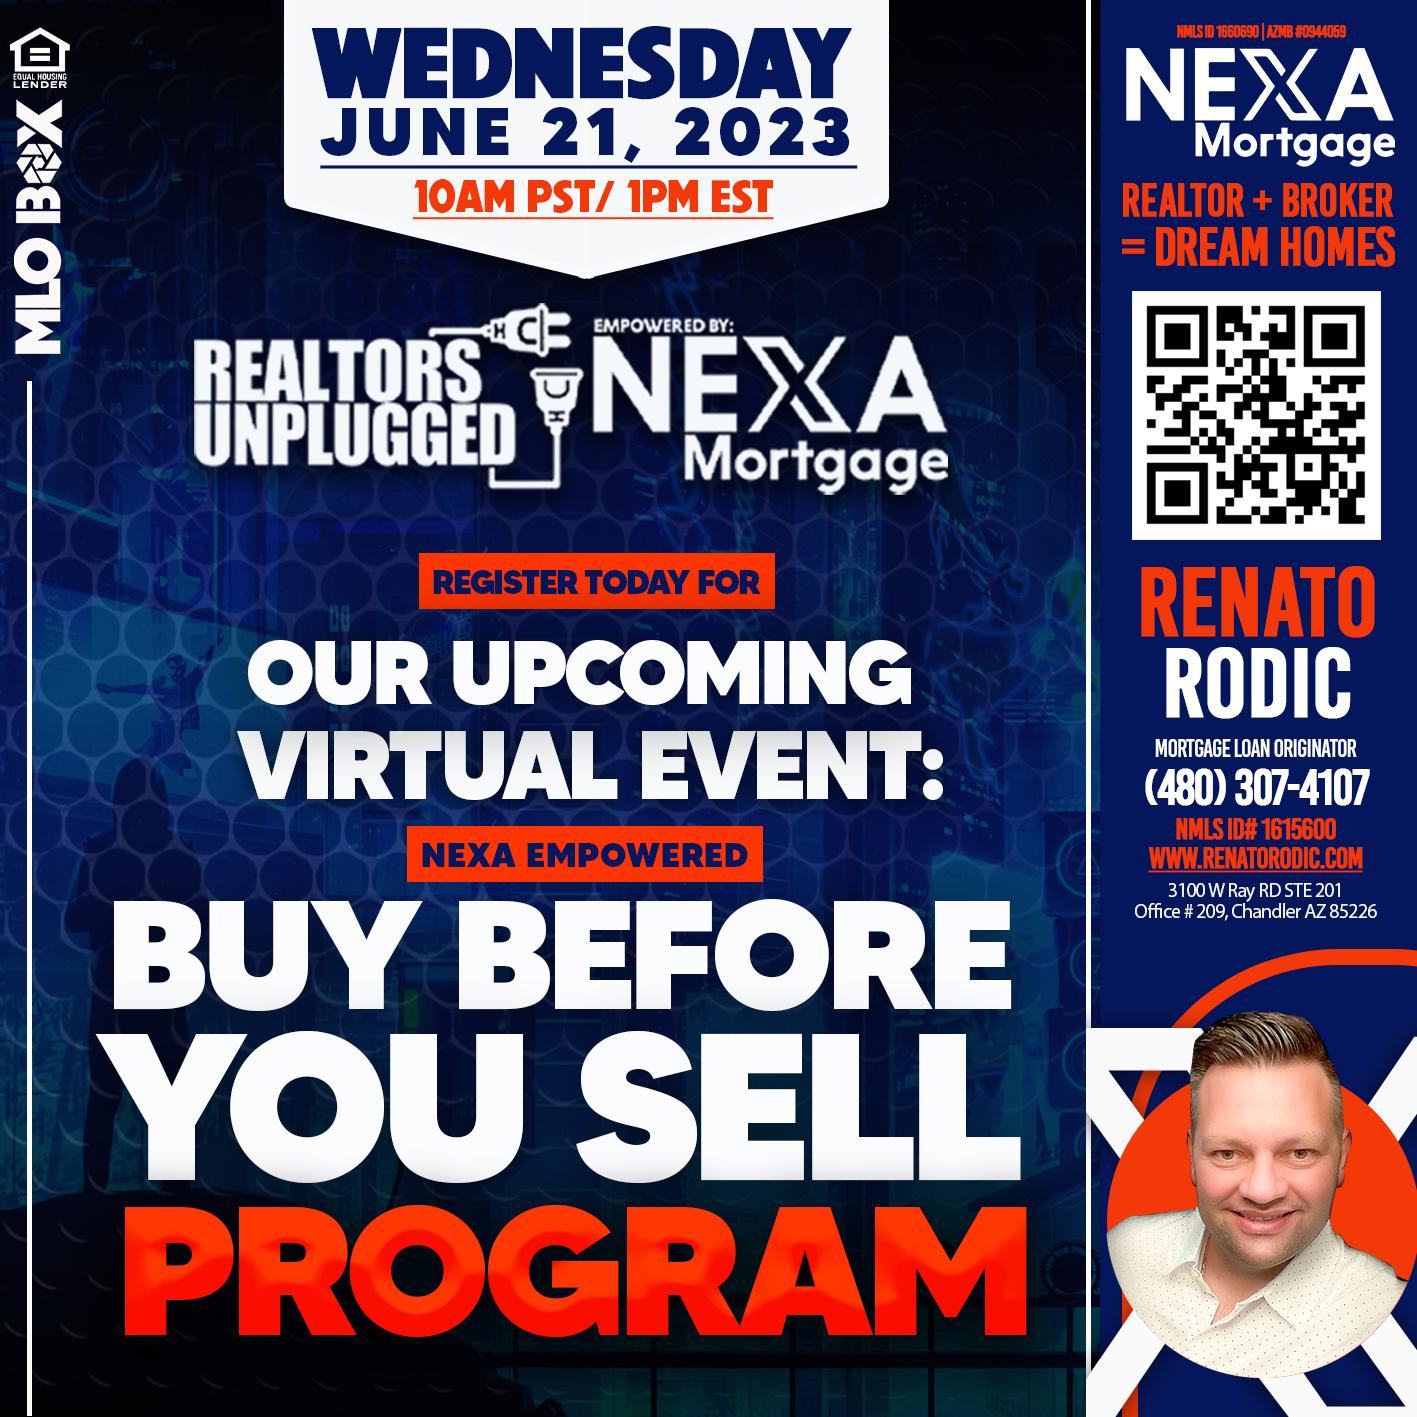 BUY BEFORE YOU SELL PROGRAM - Renato Rodic -Mortgage Loan Originator